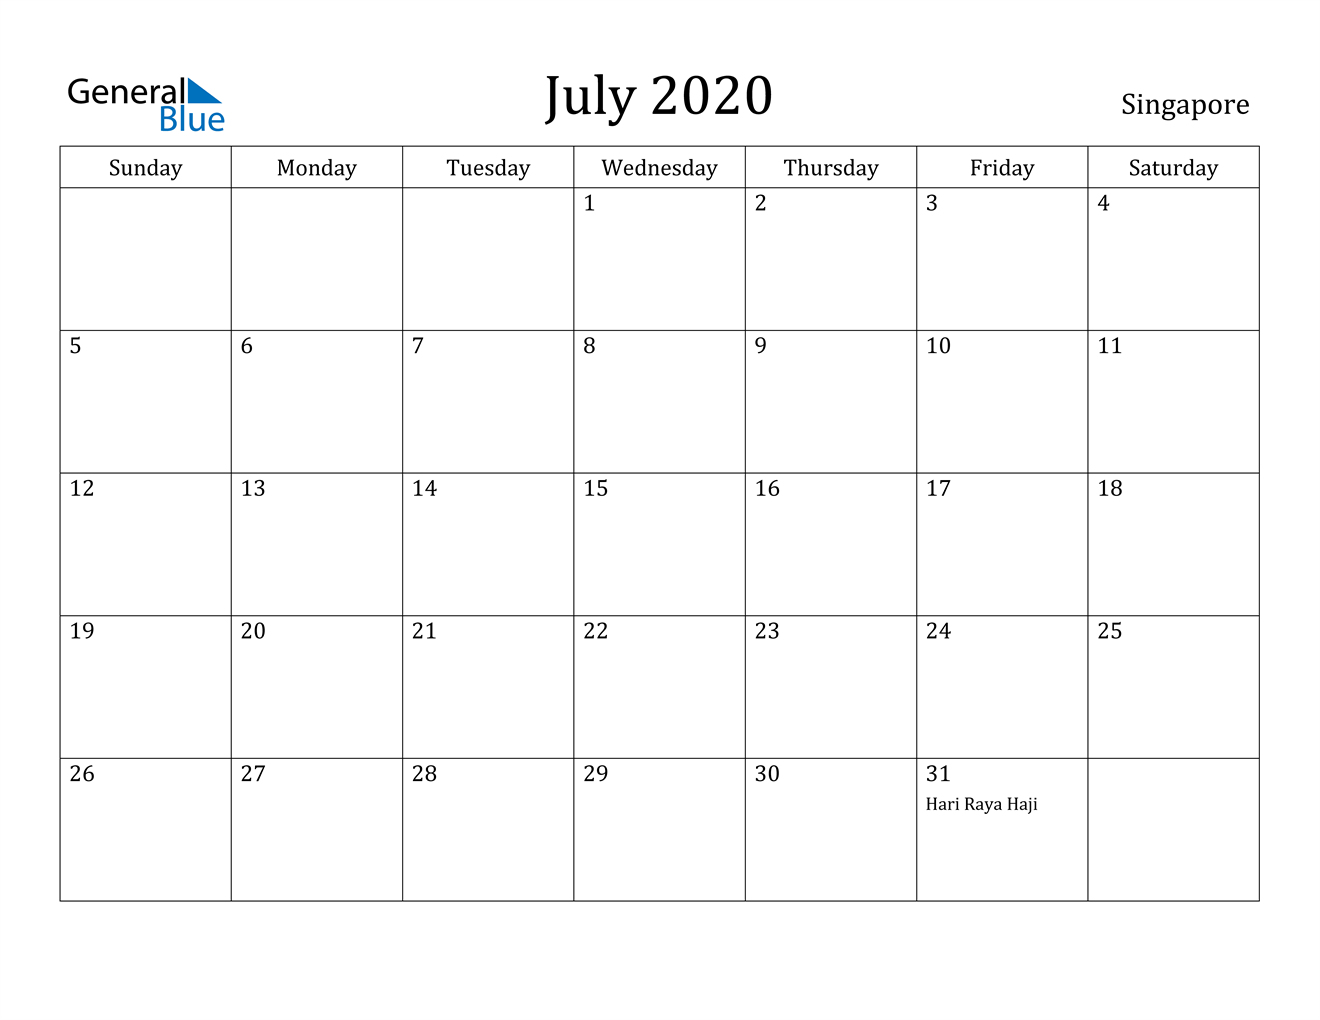 July 2020 Calendar - Singapore